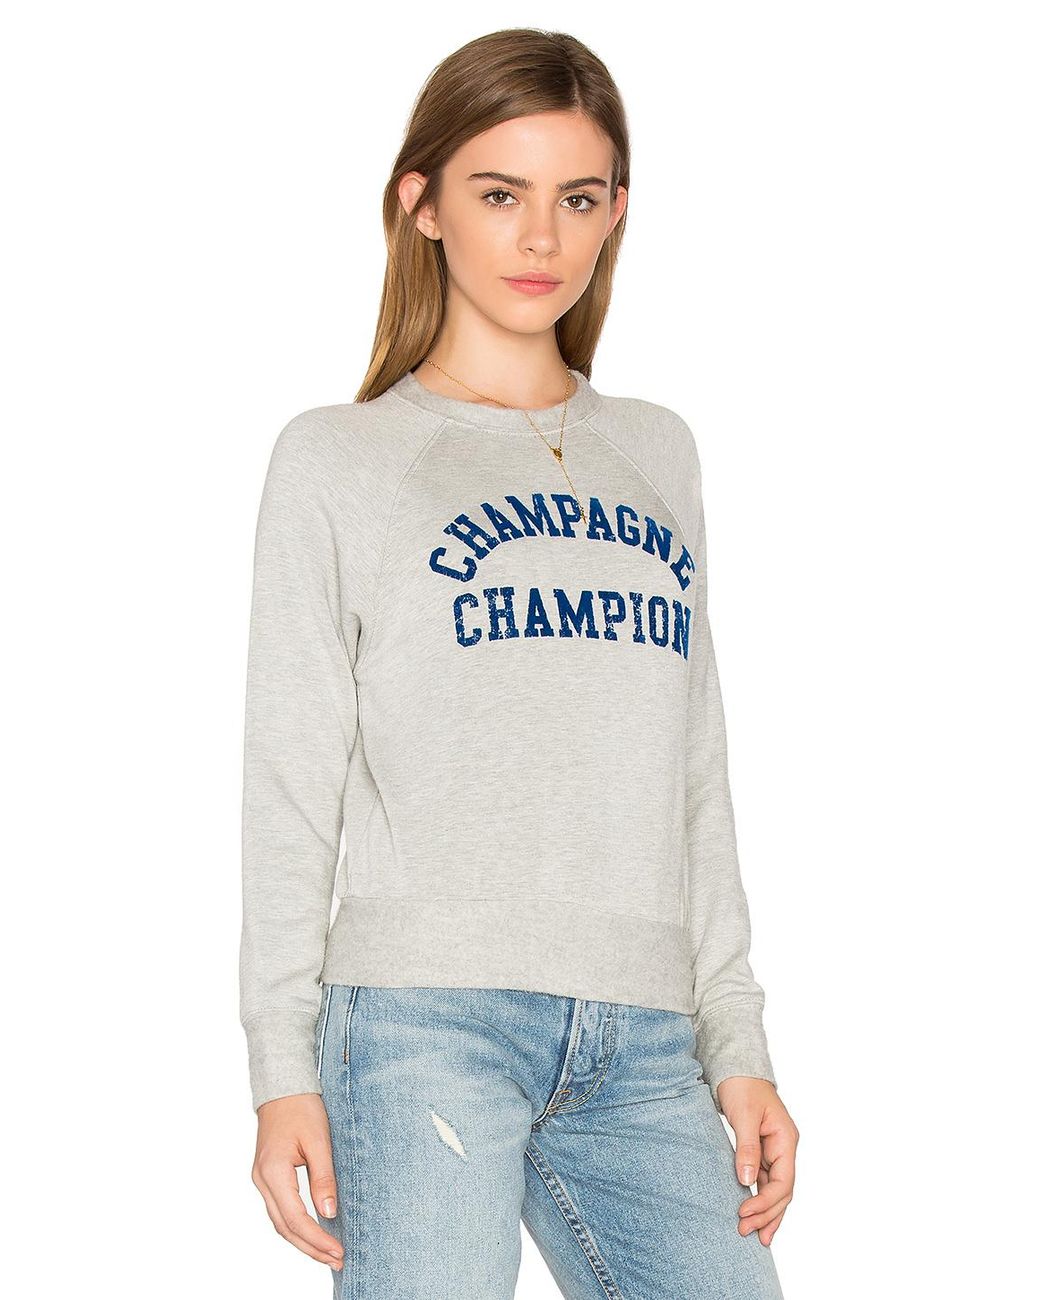 Daydreamer Champagne Champion Sweatshirt in Gray | Lyst